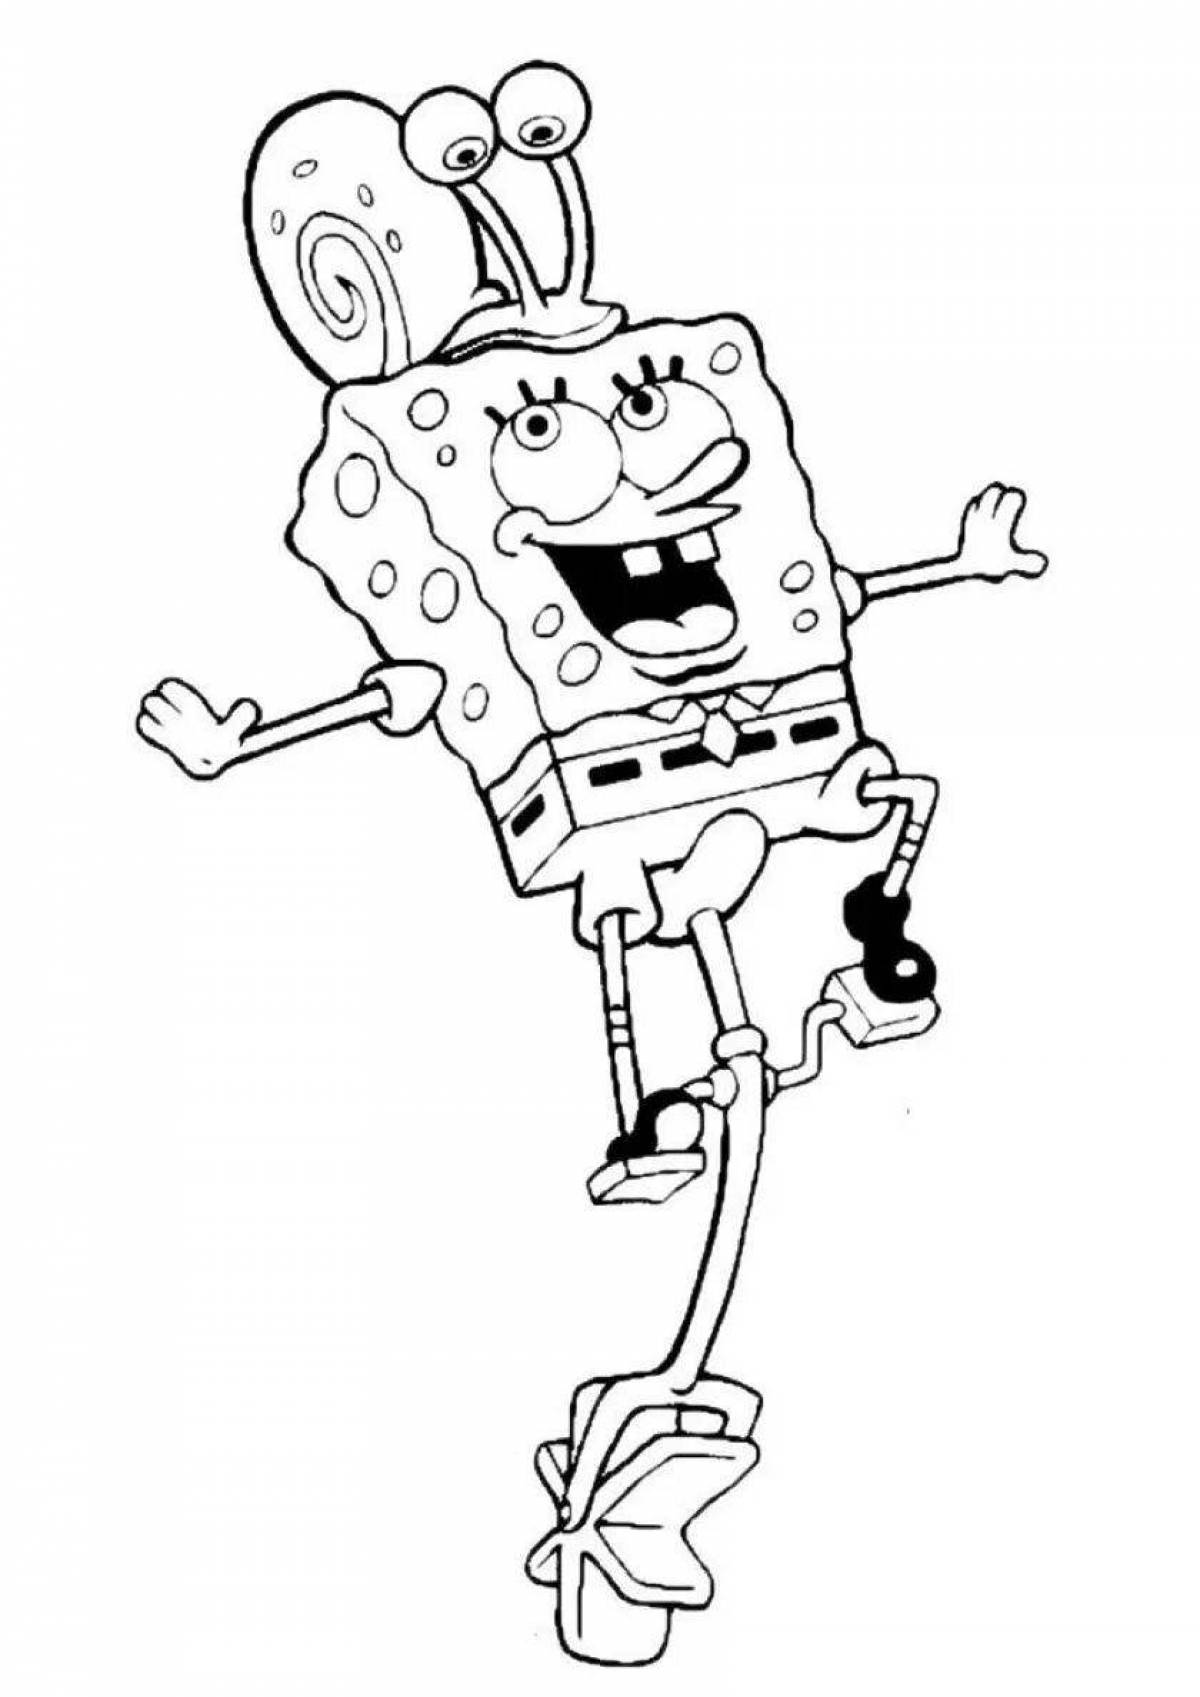 Charming spongebob coloring page